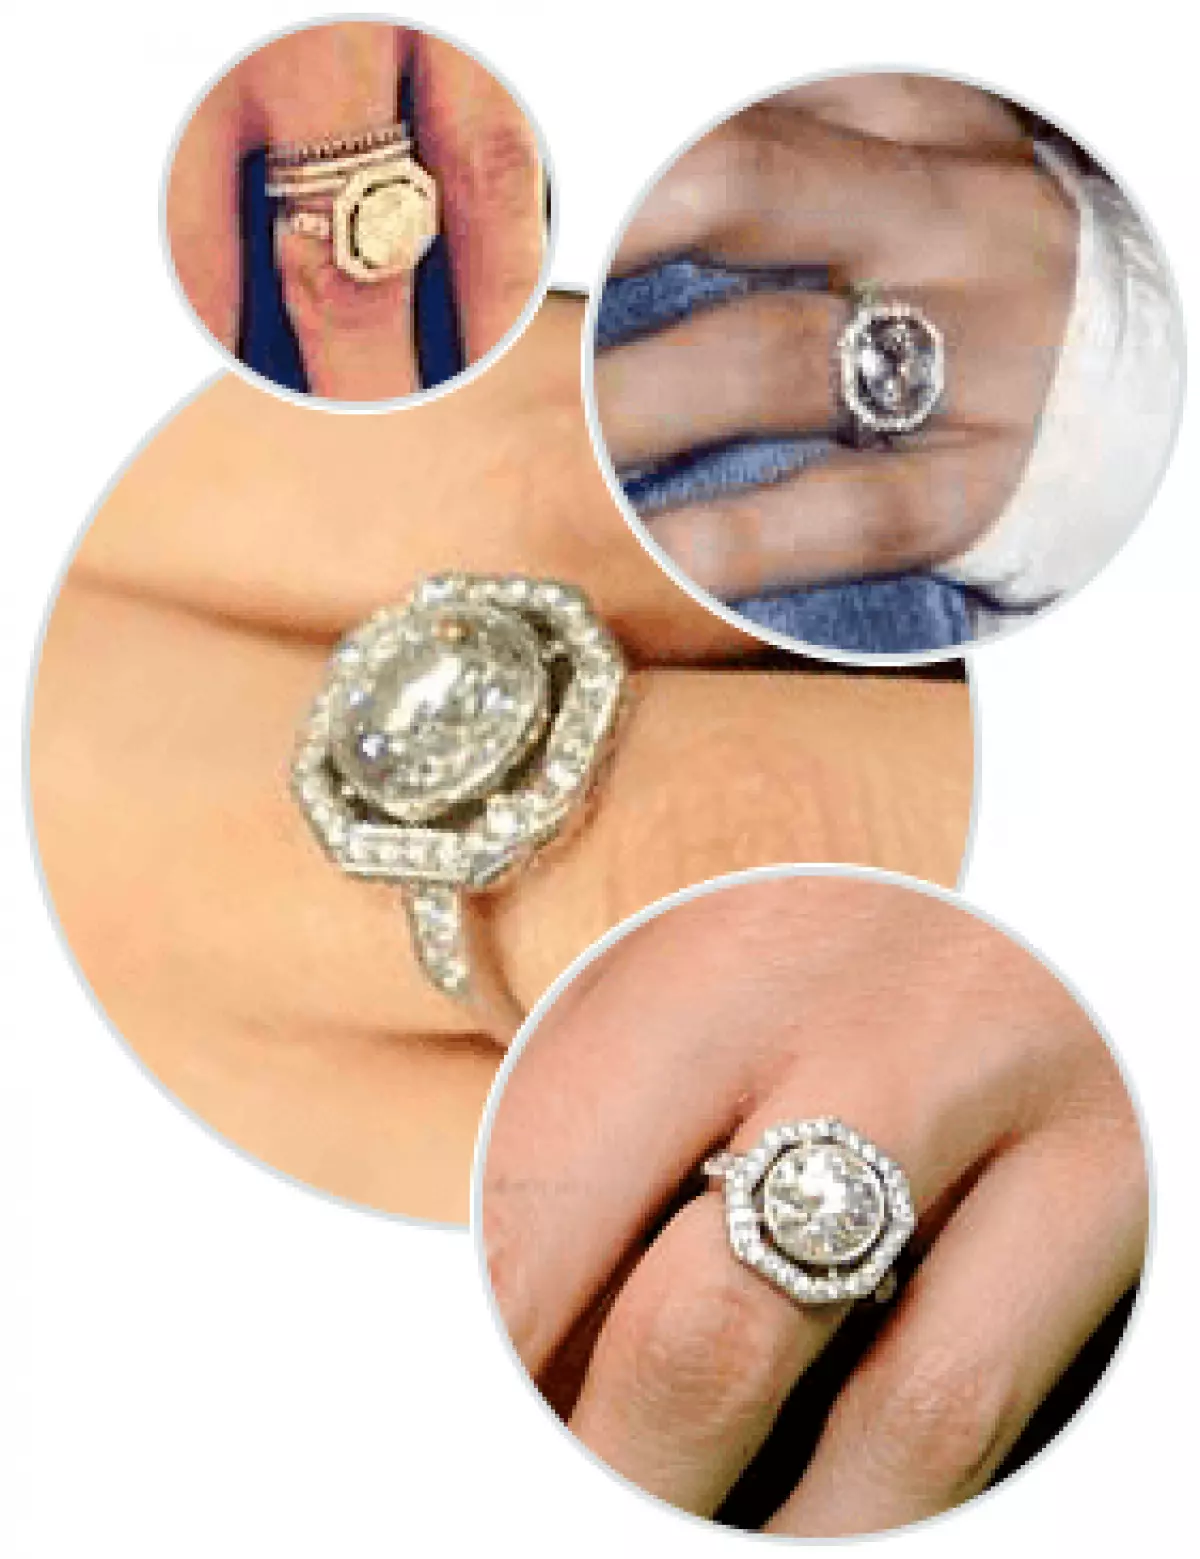 Nicole Richie's Engagement Ring